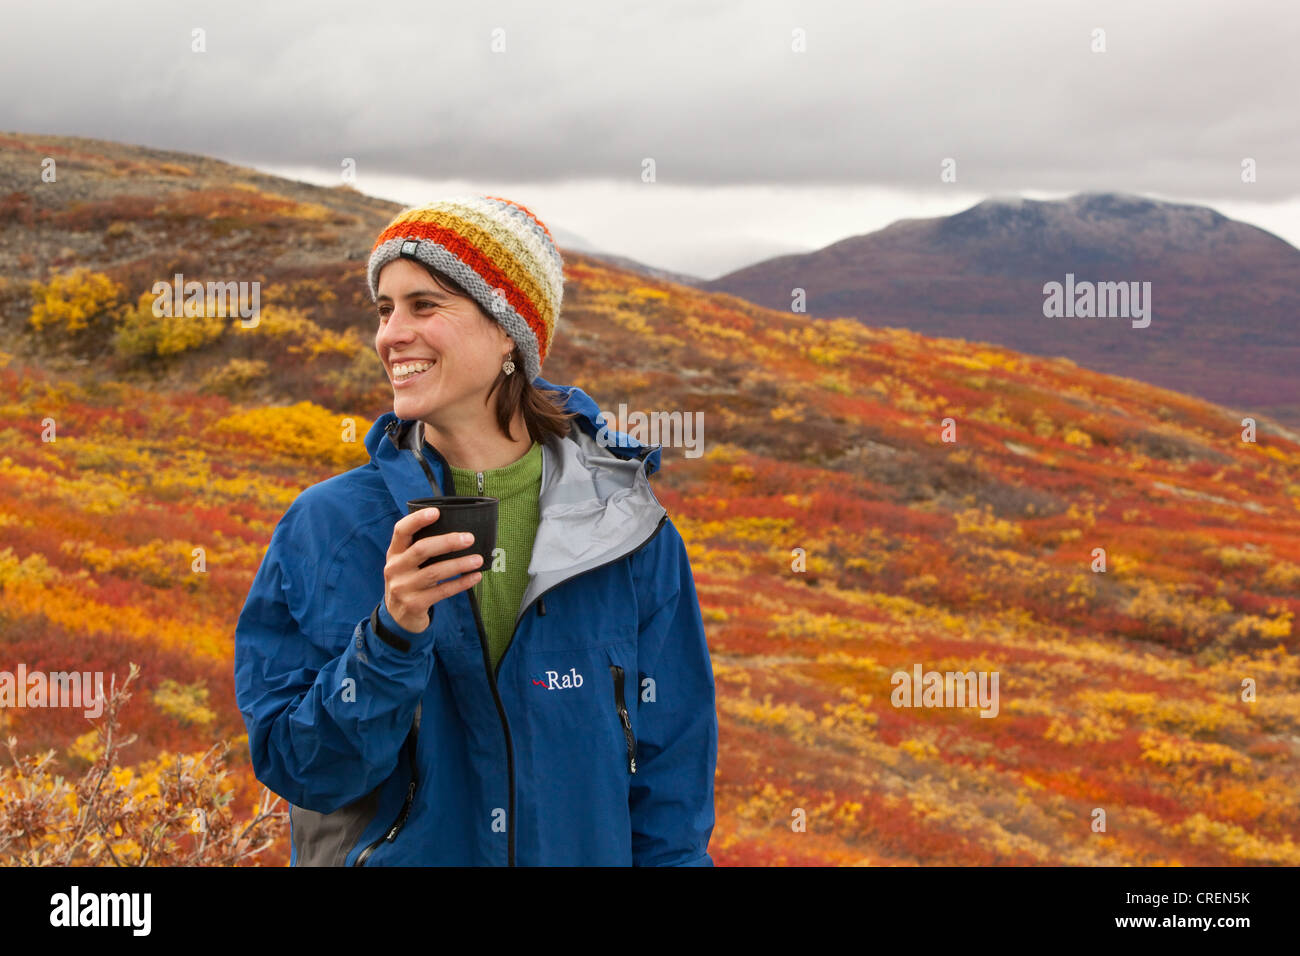 Junge Frau, Wanderer ruht, hält eine Tasse, subalpine Tundra, Indian Summer, Herbst, in der Nähe von Fish Lake, Yukon Territorium, Kanada Stockfoto